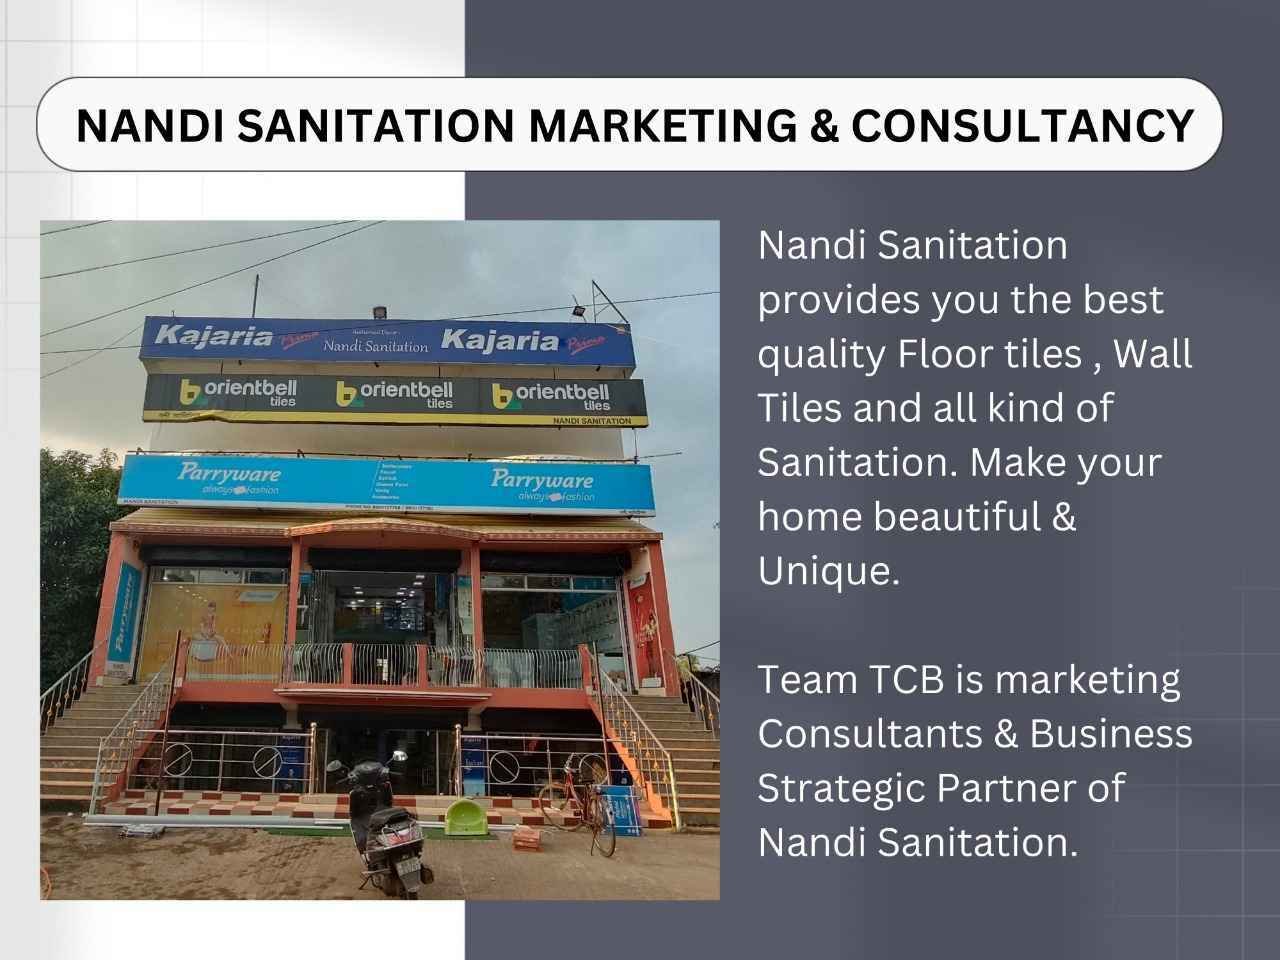 Nandi Sanitation Marketing & Consultancy